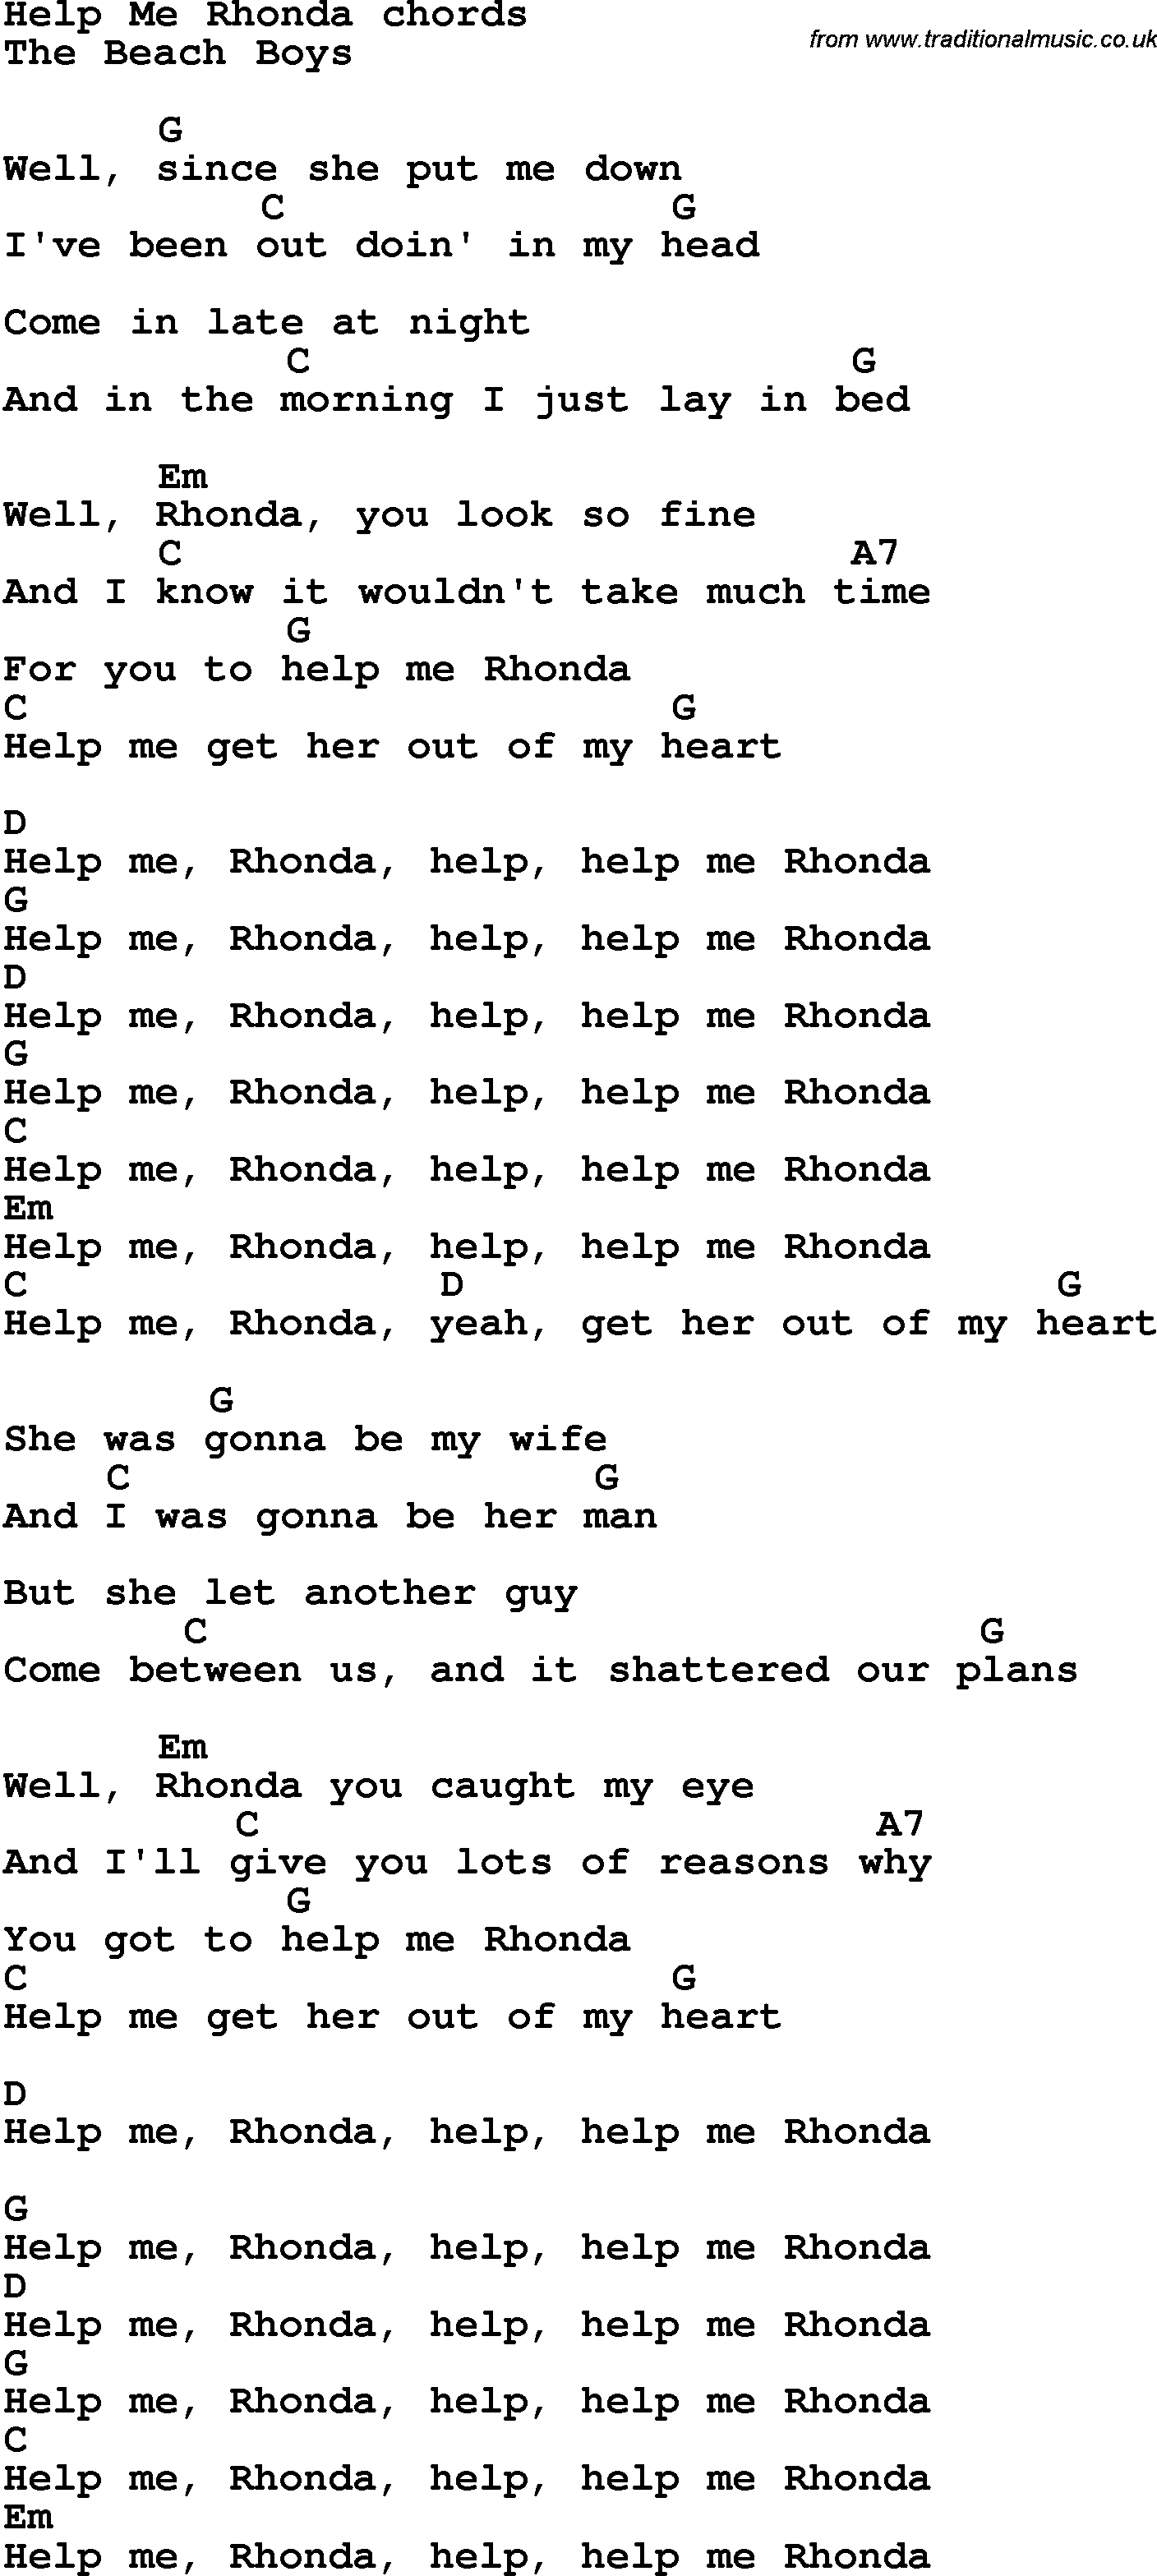 Song Lyrics with guitar chords for Help Me Rhonda